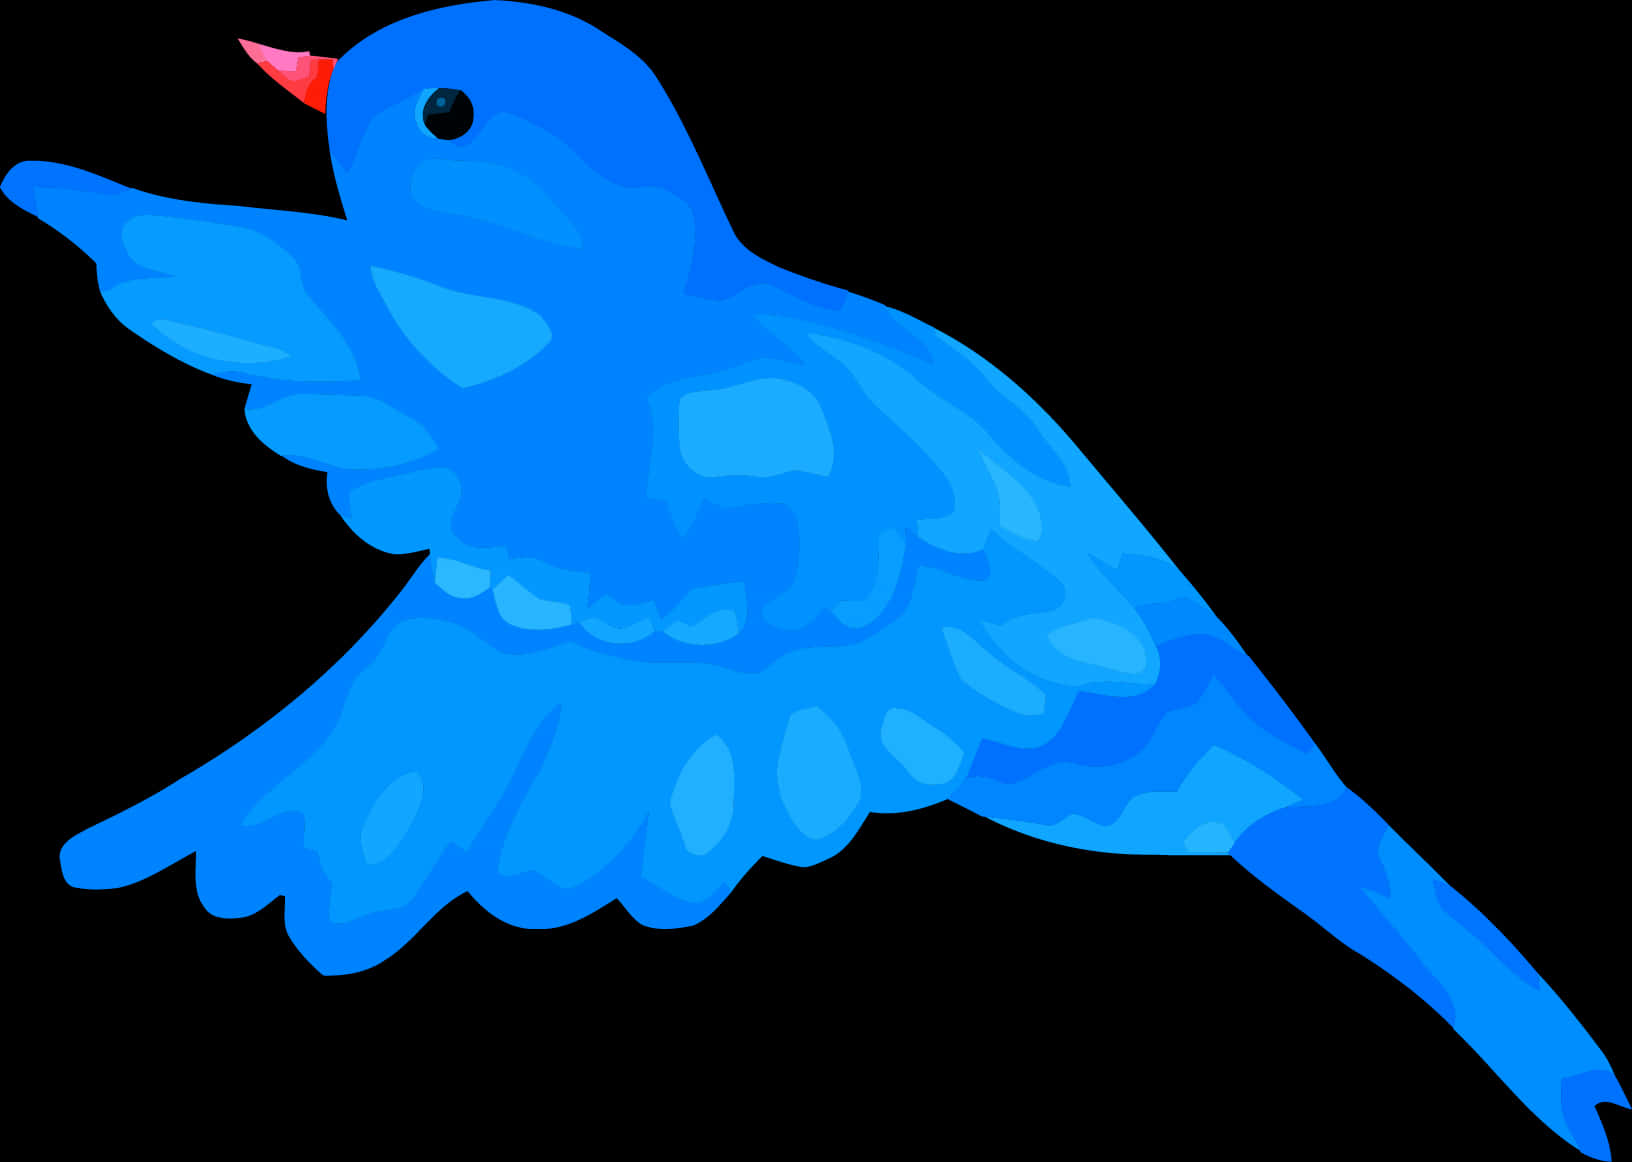 Blue Bird Illustration PNG